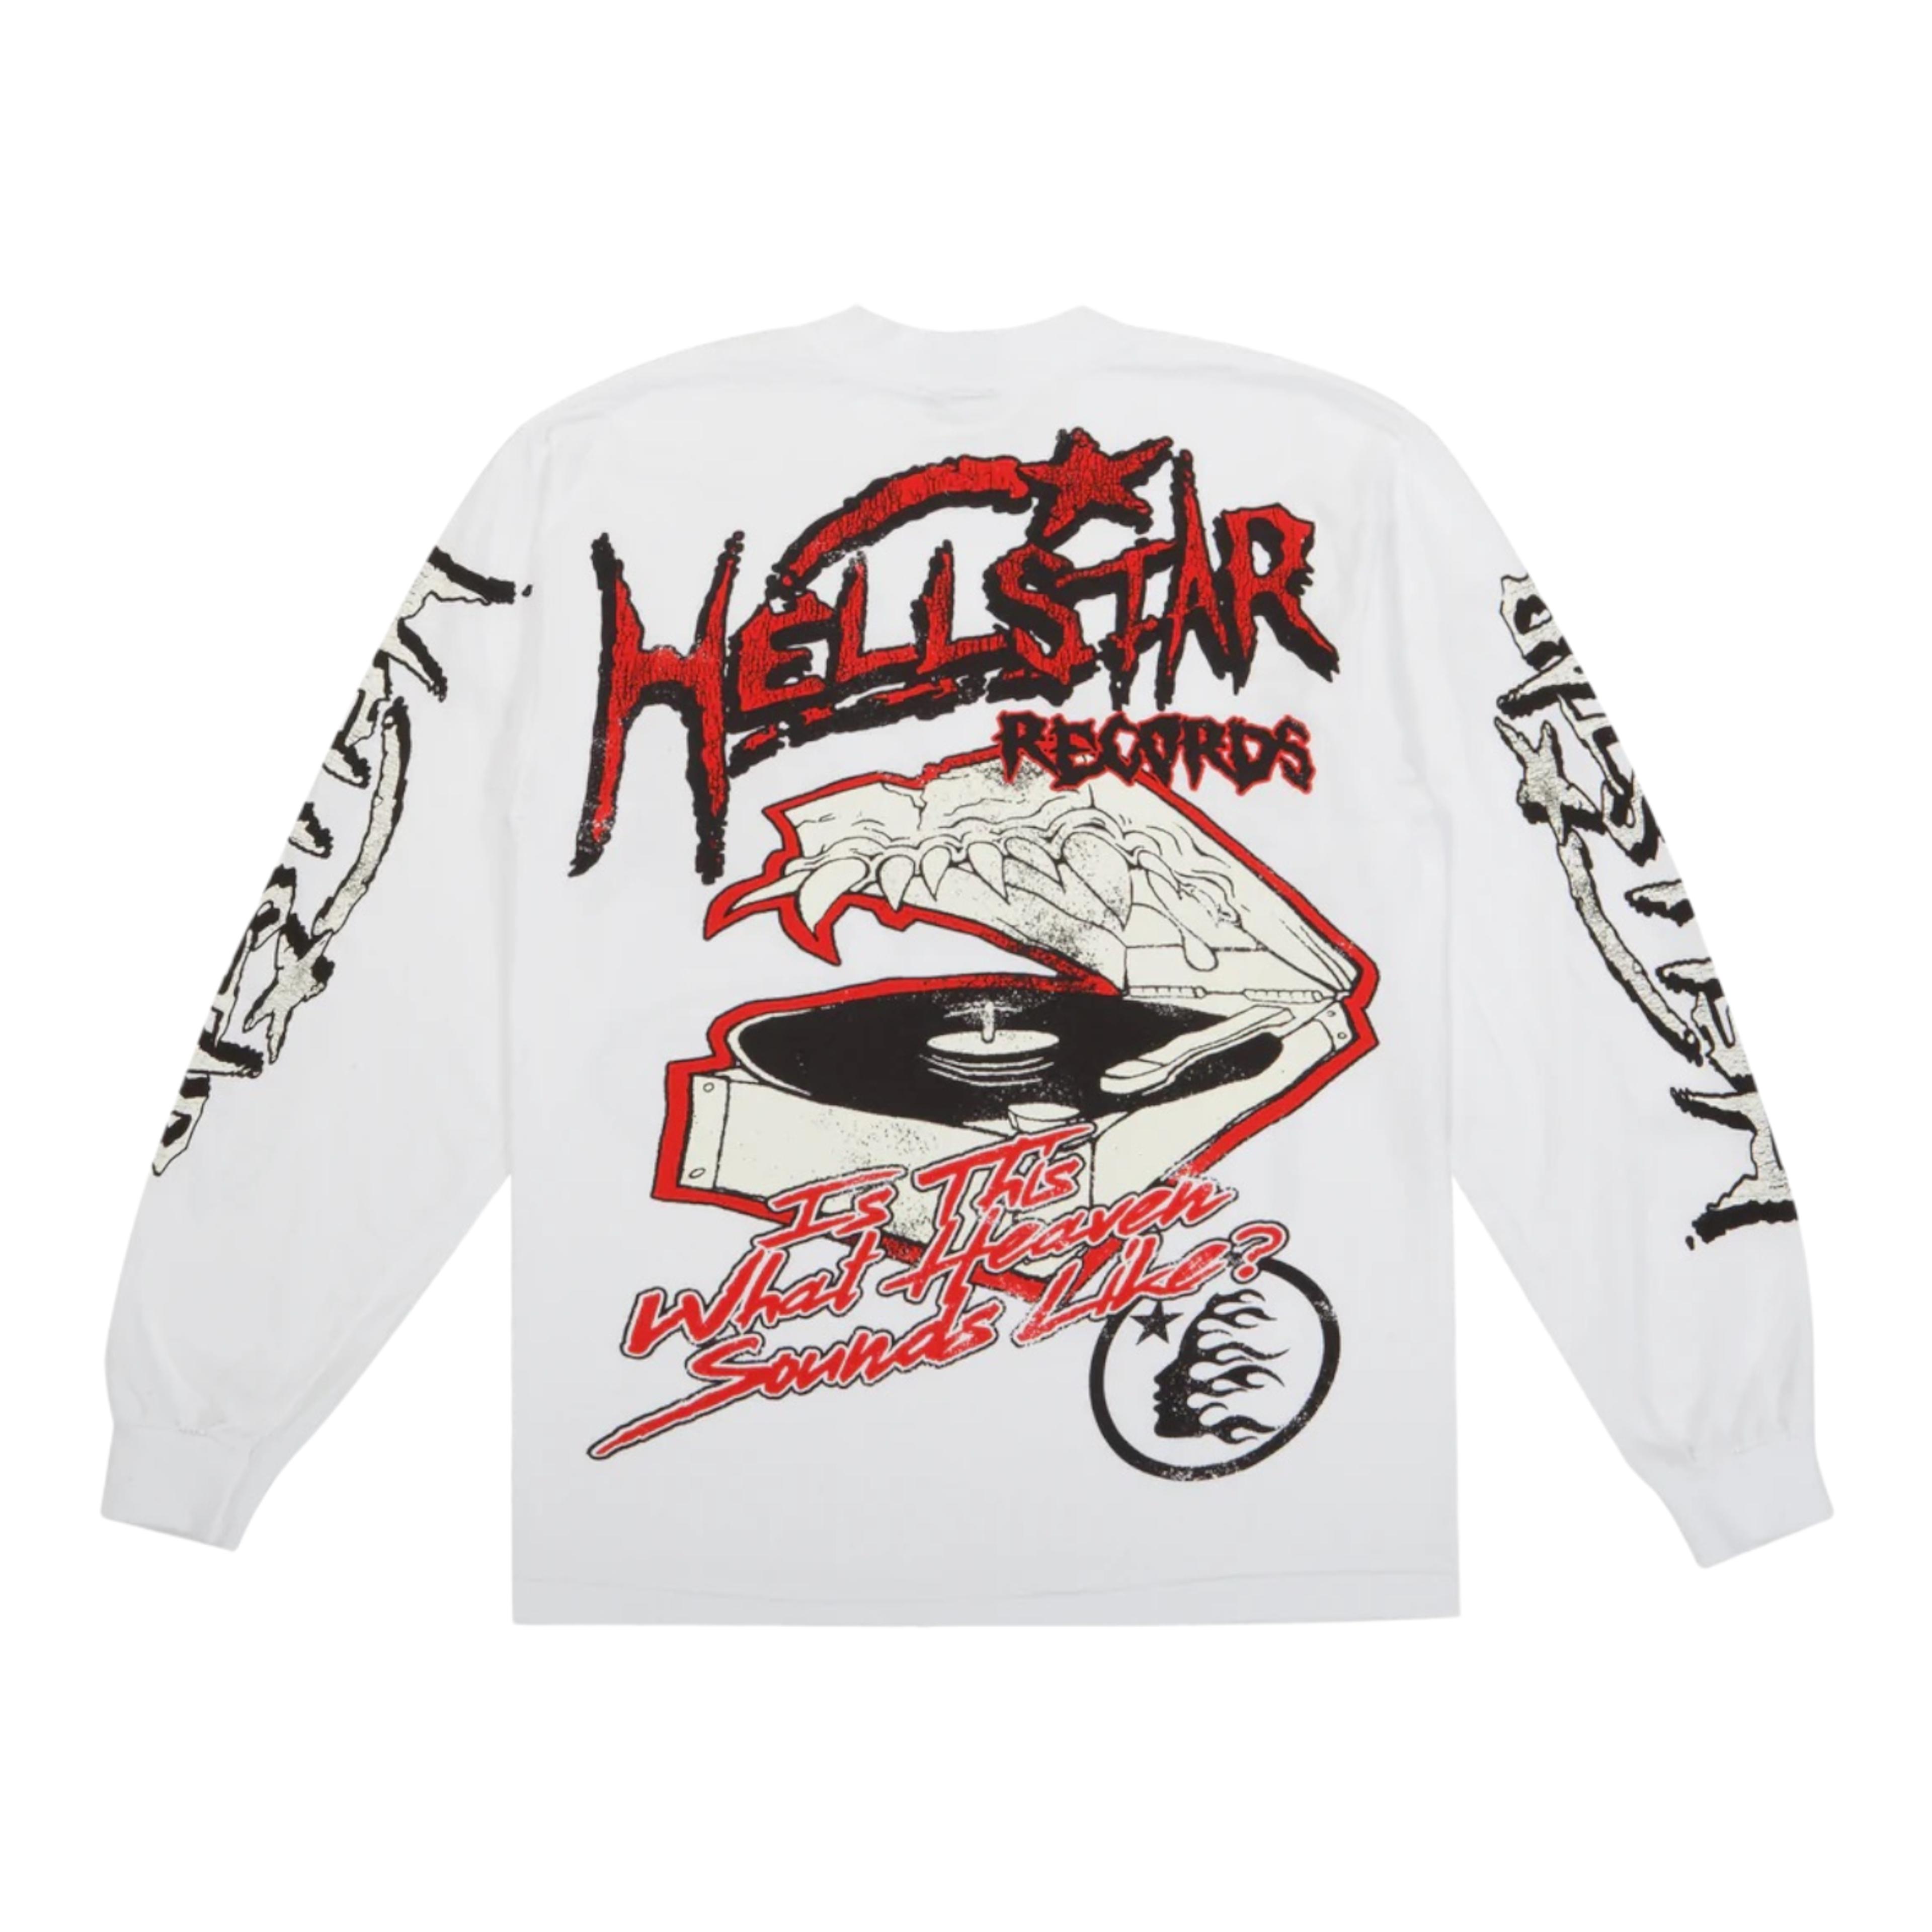 Alternate View 1 of Hellstar Studios Records Long Sleeve Tee Shirt White